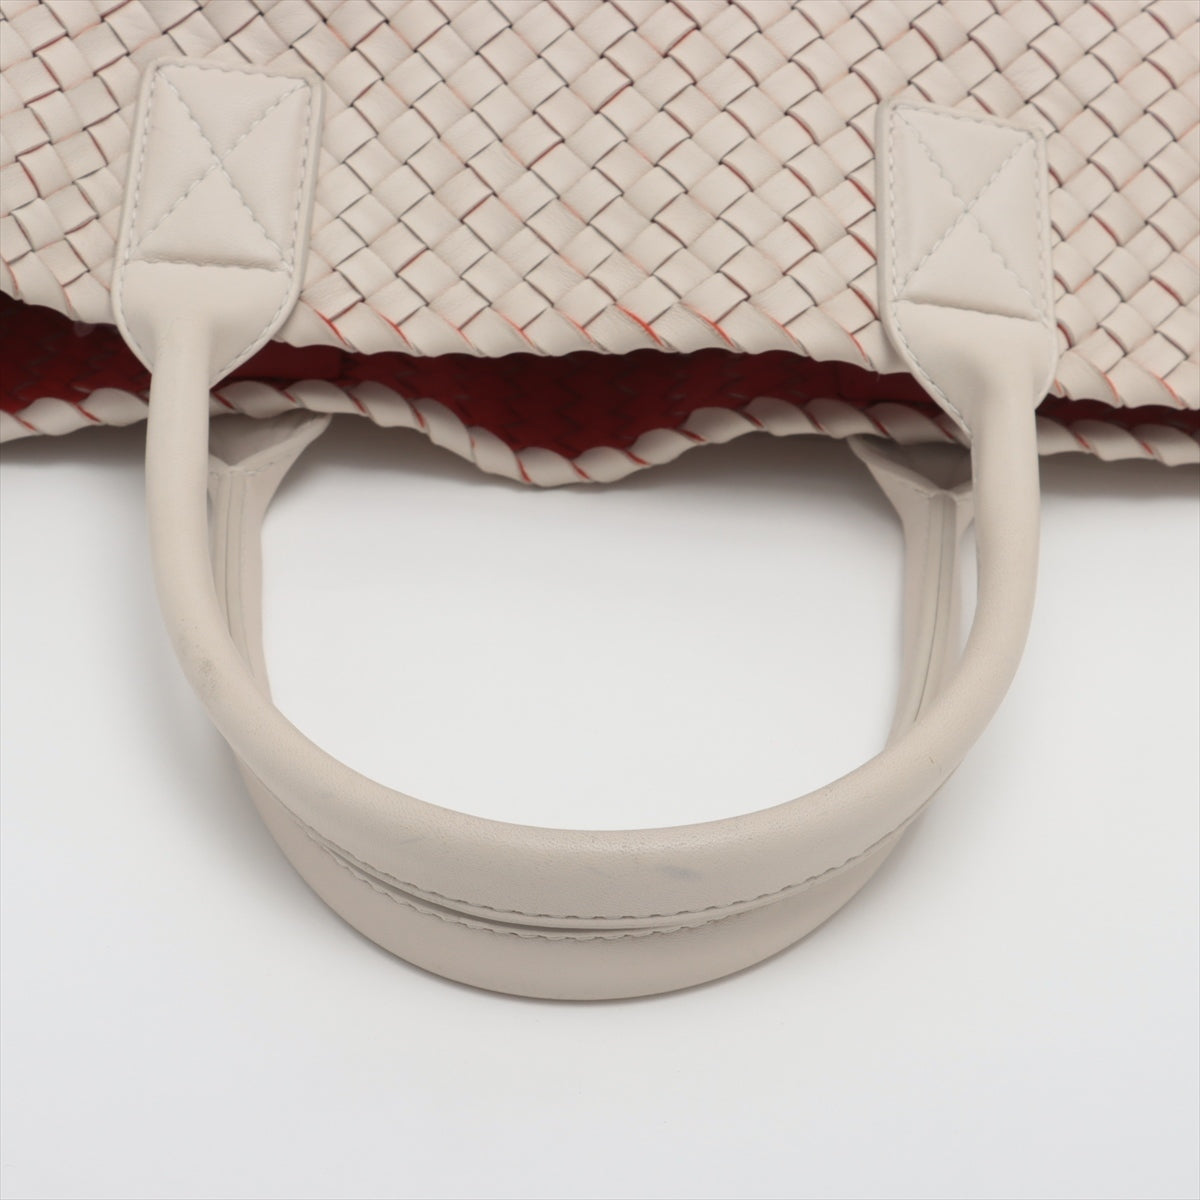 Bottega Veneta Intrecciato Cabas Leather Tote bag Red x white